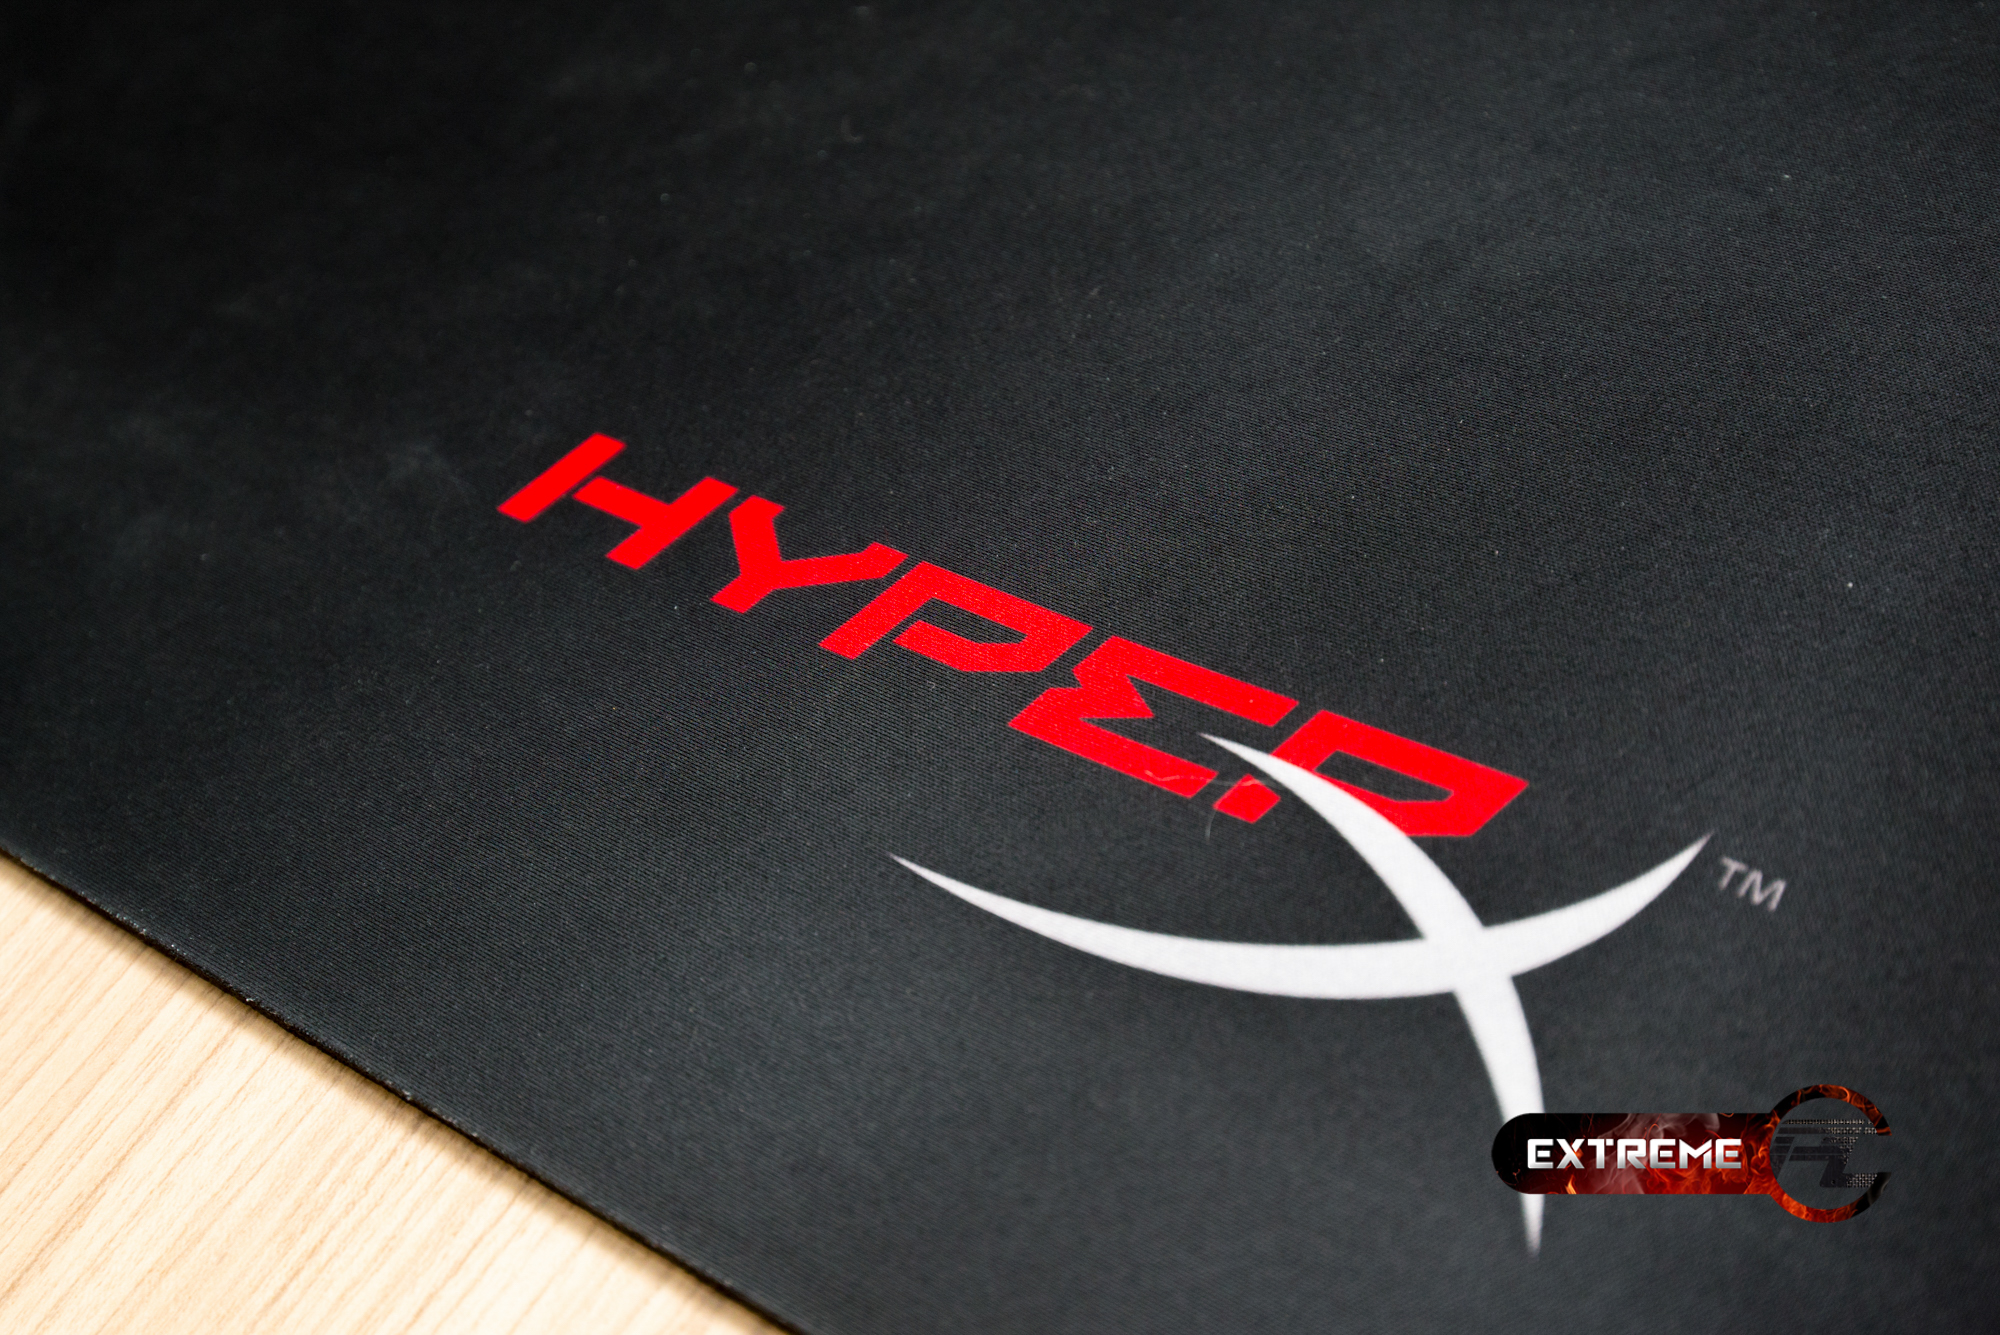 Review: Kingston HyperX FURY Pro Gaming Mouse Pad (XL)